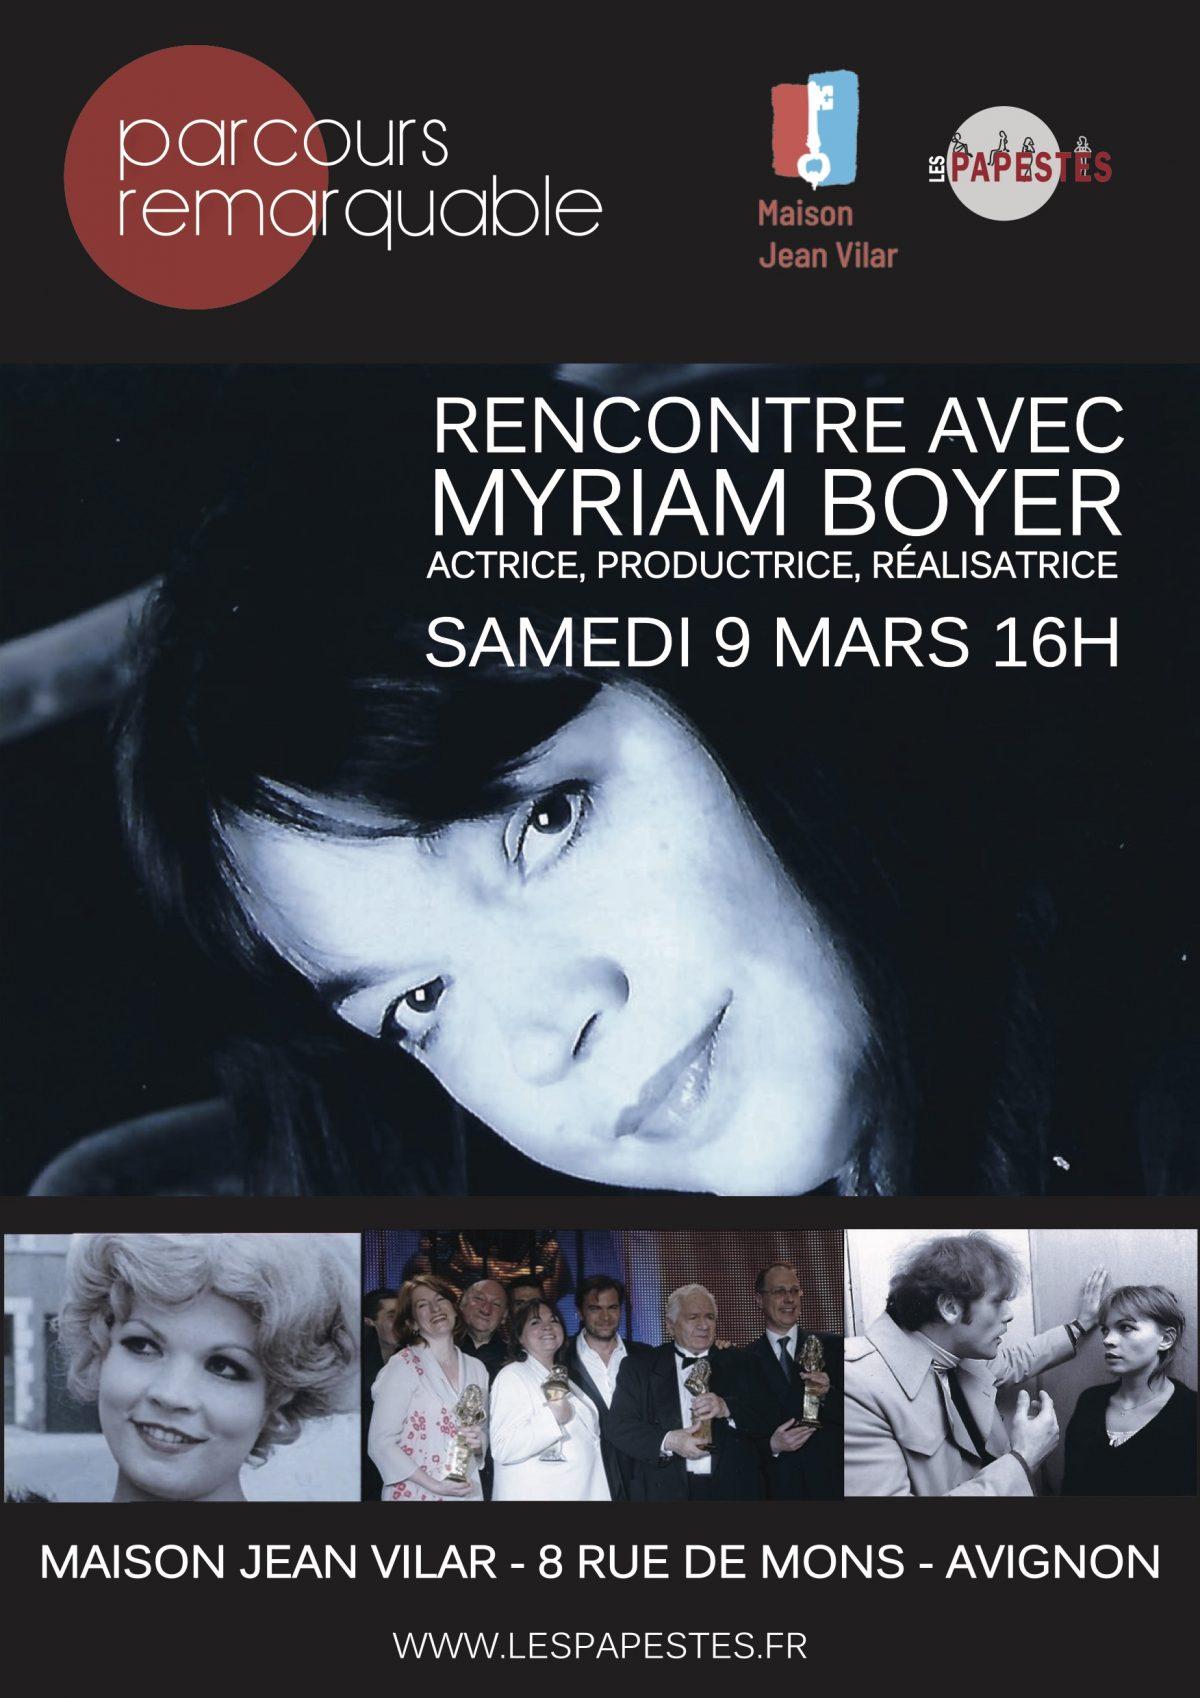 Myriam Boyer - Maison Jean Vilar